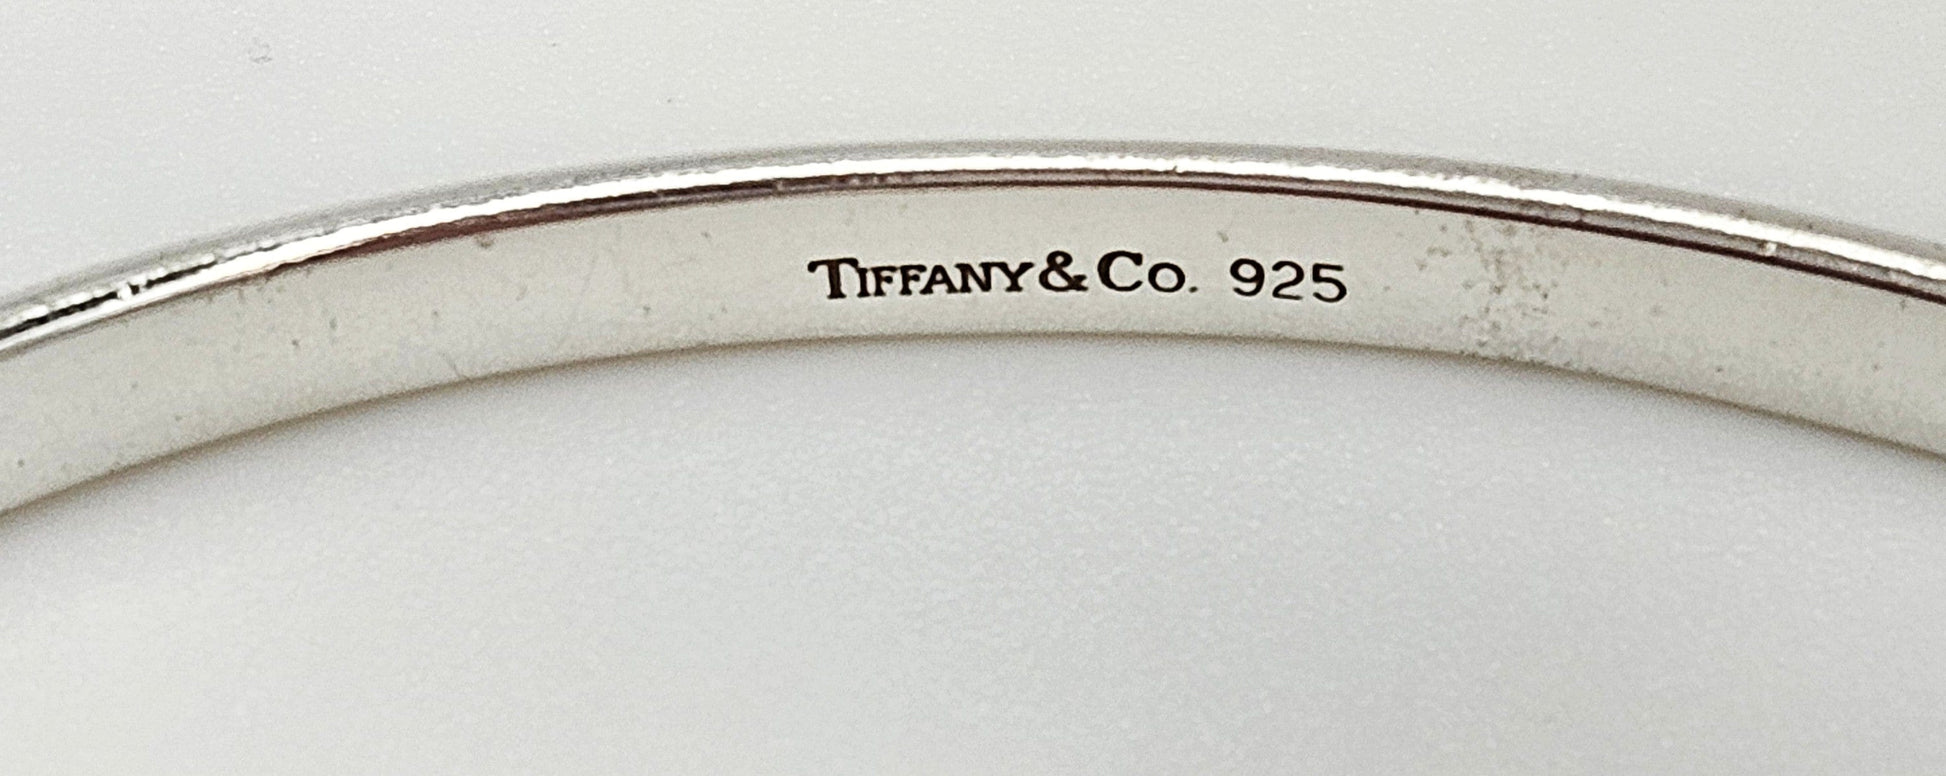 Tiffany & Co. Jewelry Vintage Tiffany & Co  Solid Sterling Silver Modernist Bangle Bracelet